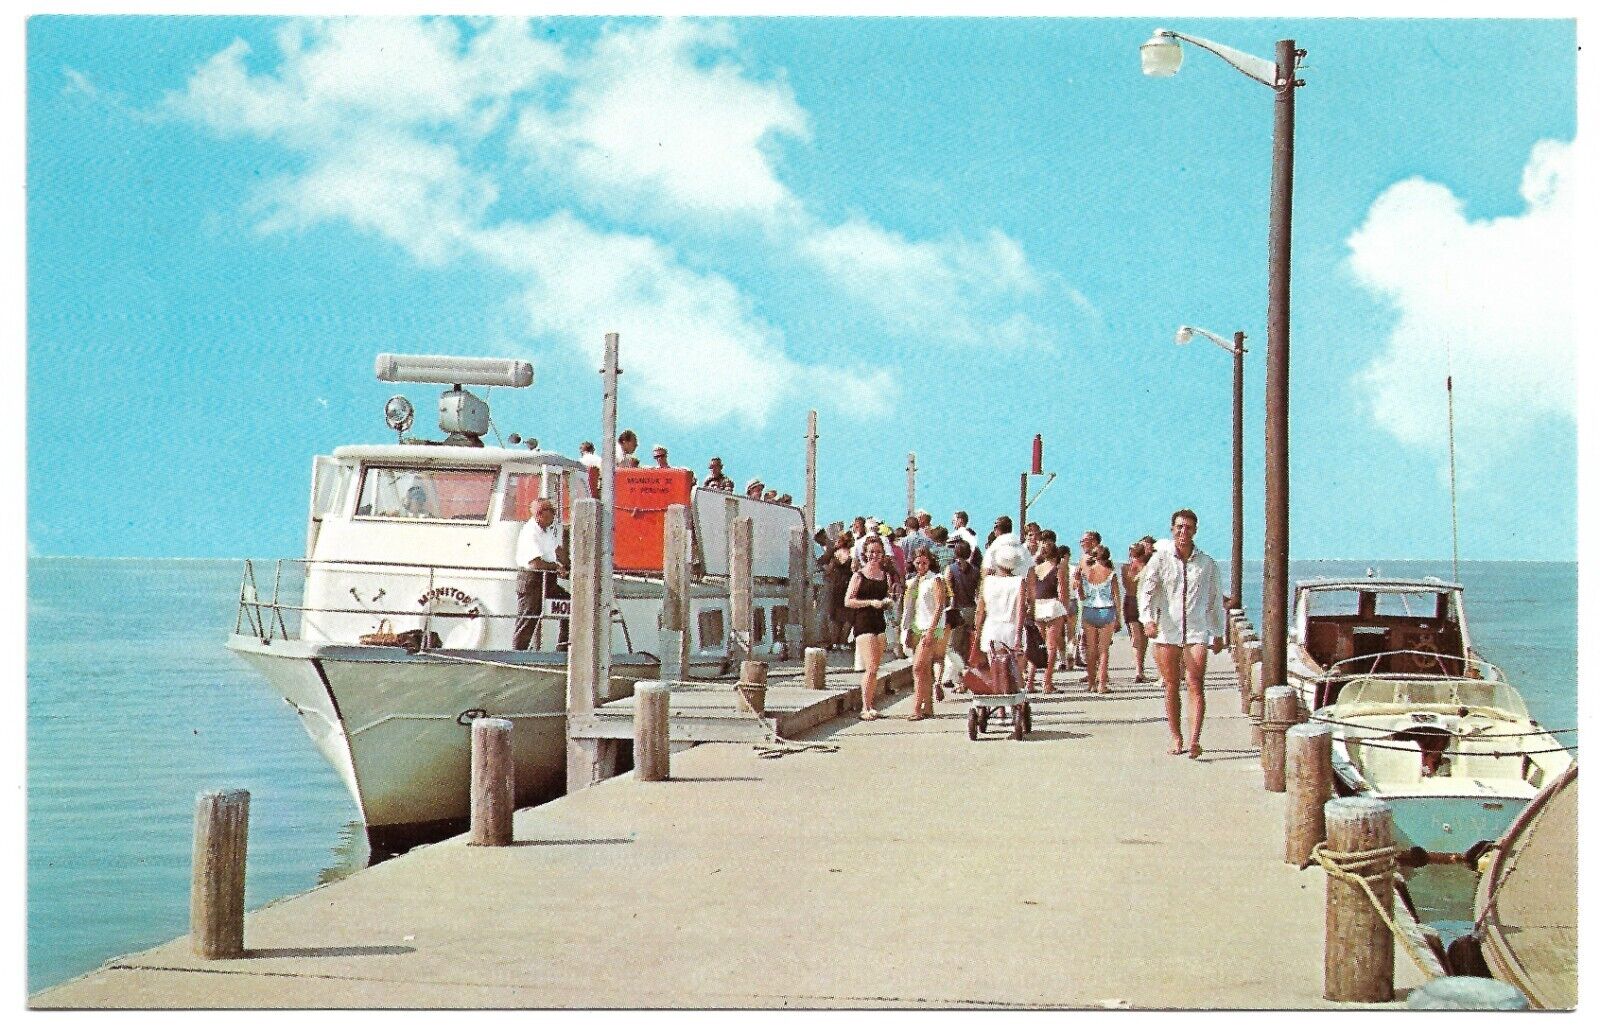 Cherry Grove Fire Island NY Dock Ferry Boat Boarding People Vintage Postcard